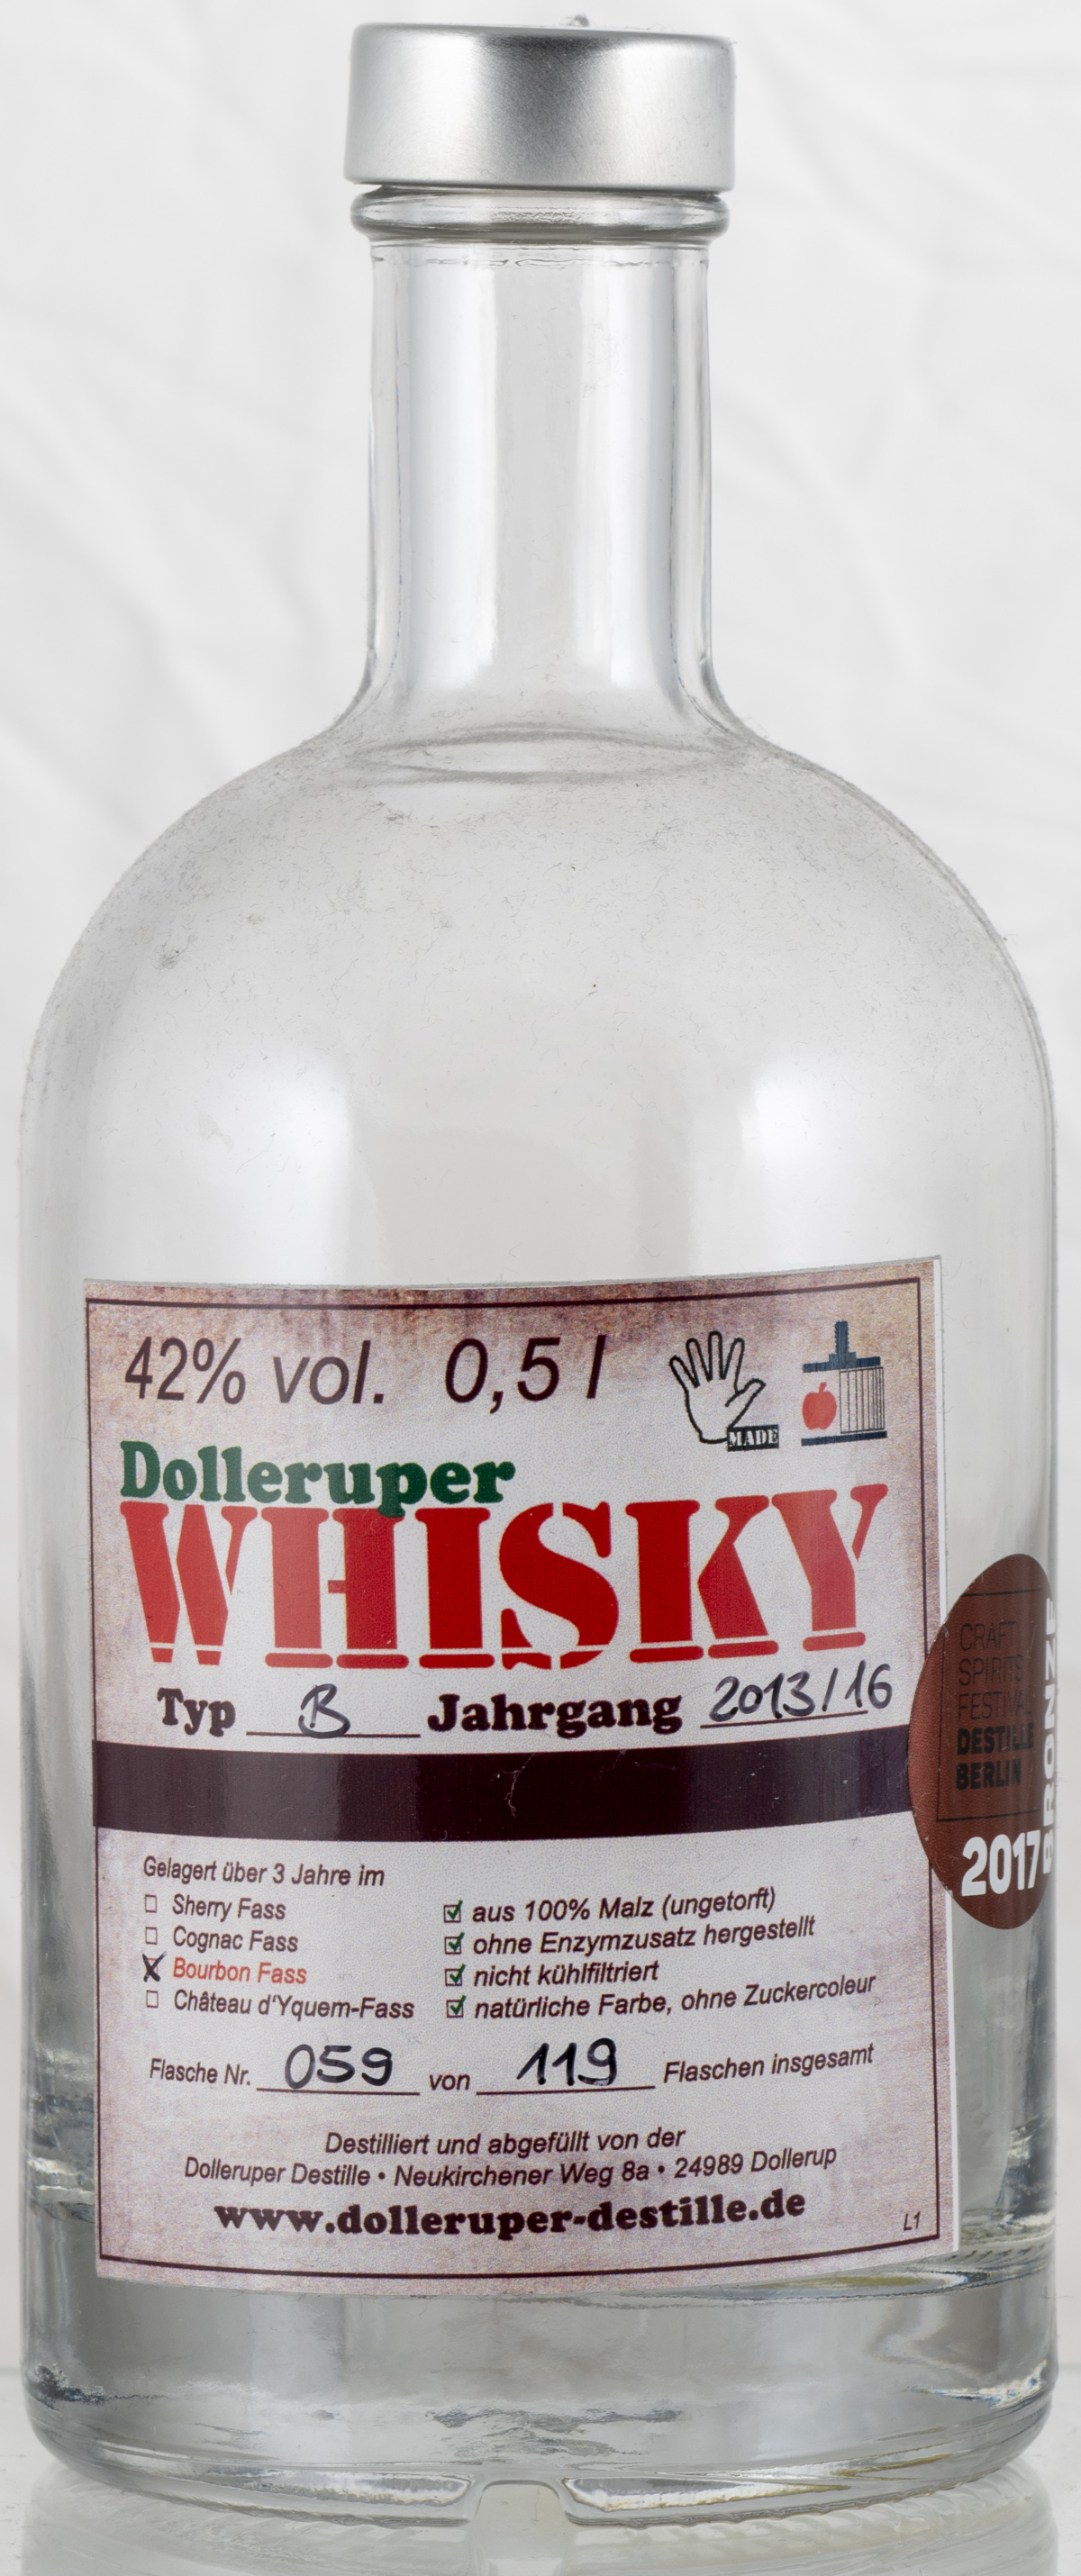 Billede: PHC_4063 - Dolleruper Whisky.jpg